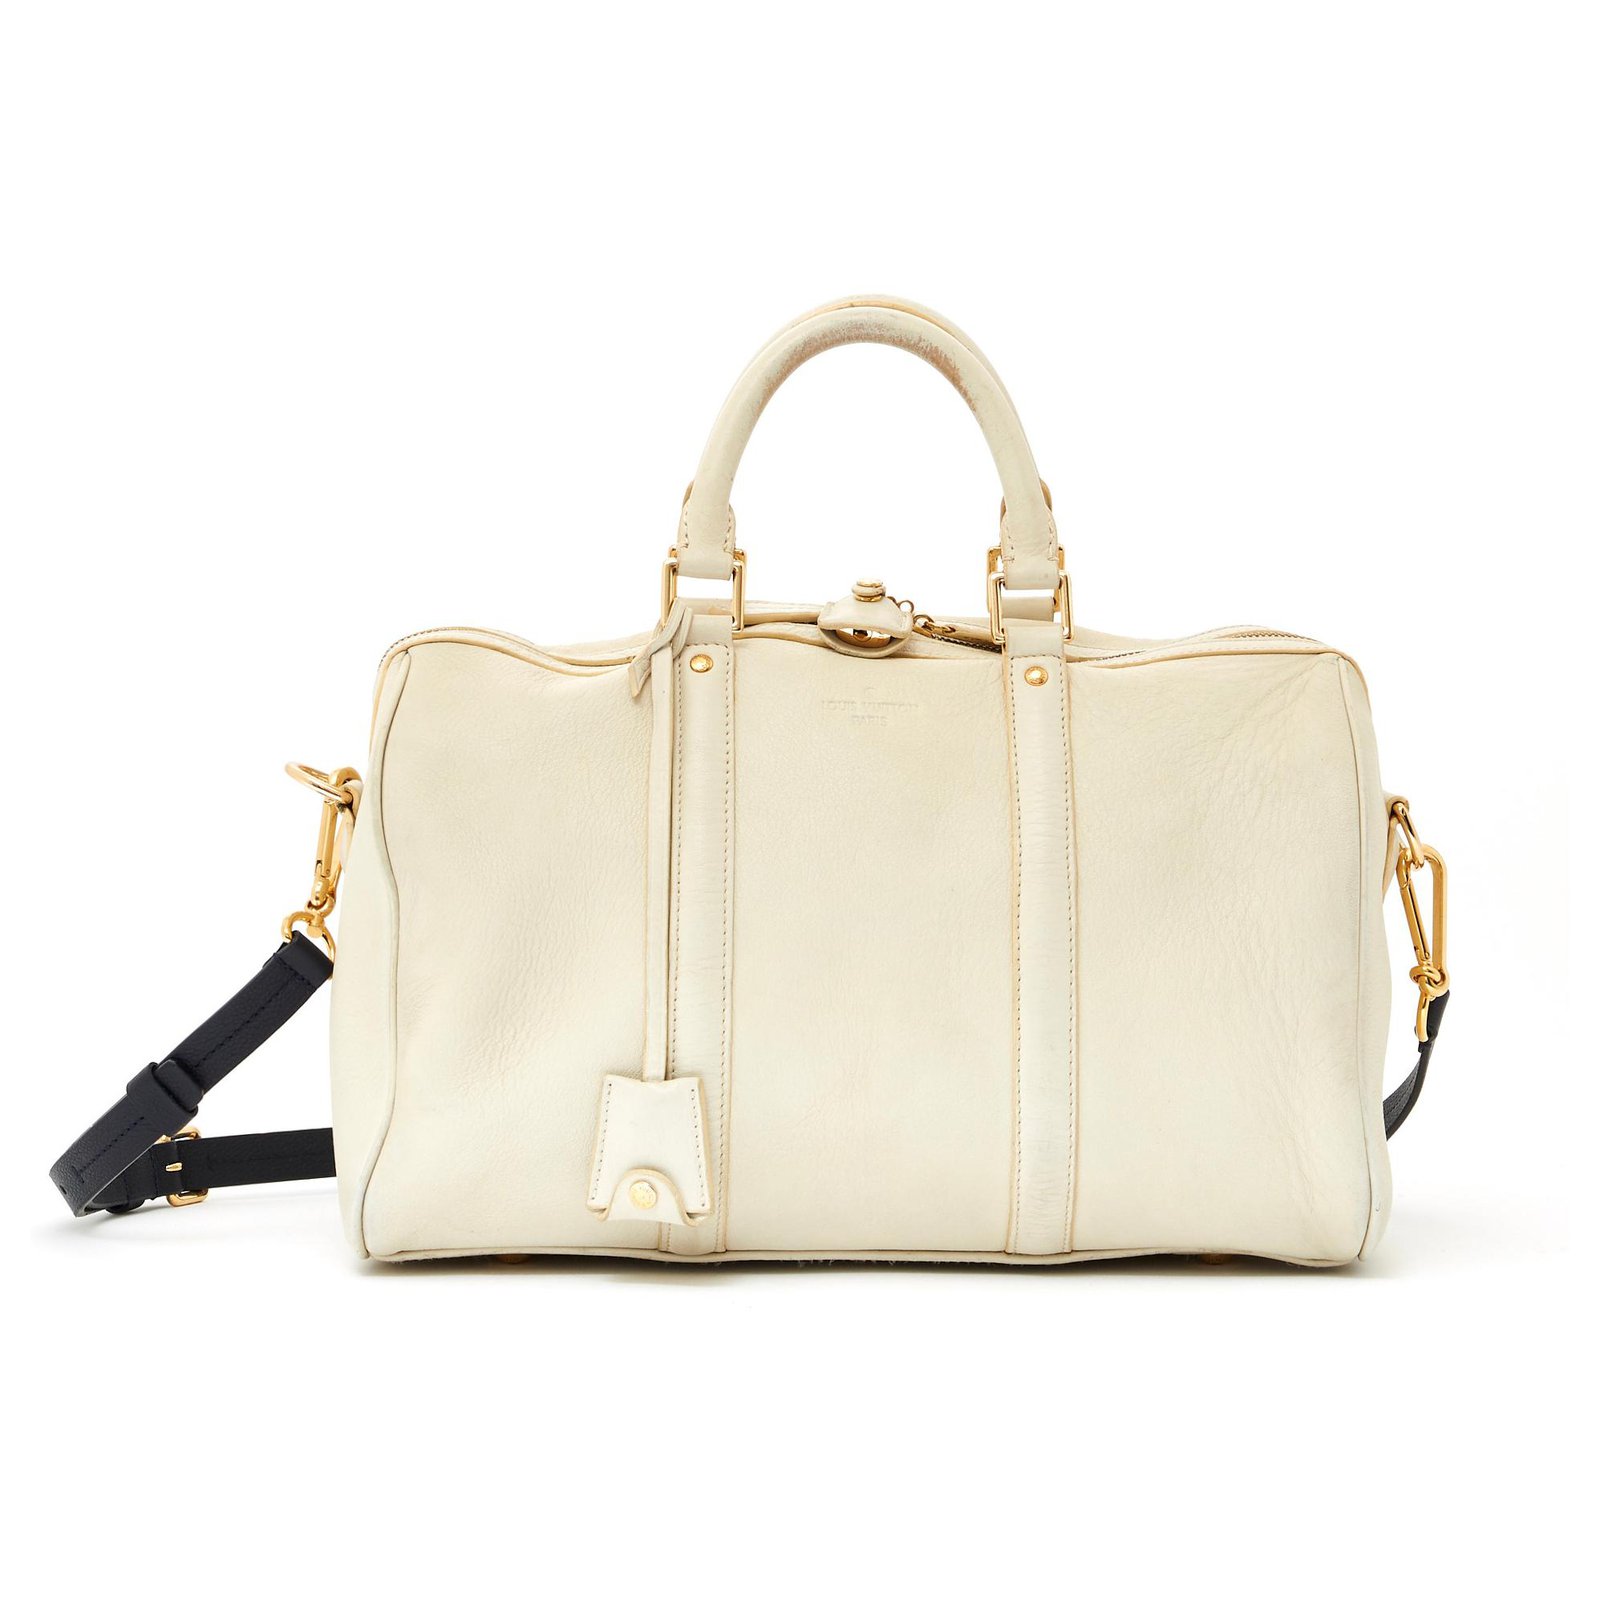 Louis Vuitton SPEEDY STRAP 35 Sofia Coppola Handbags Leather,Metal Golden,Cream,Navy blue ref ...